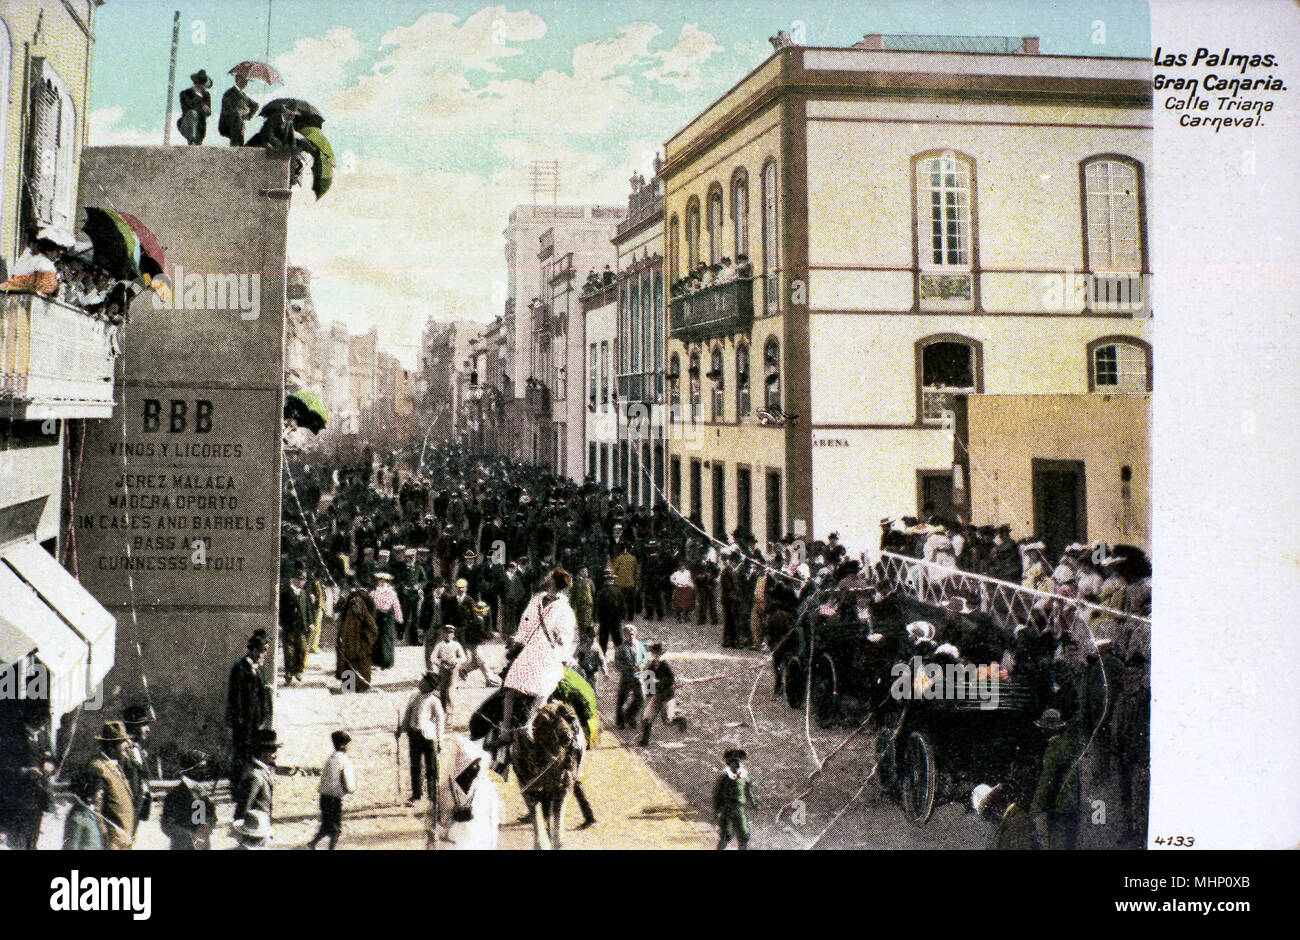 Calle Triana, Las Palmas, Gran Canaria, Kanarische Inseln, mit Karneval statt. Datum: ca. 1900 s Stockfoto